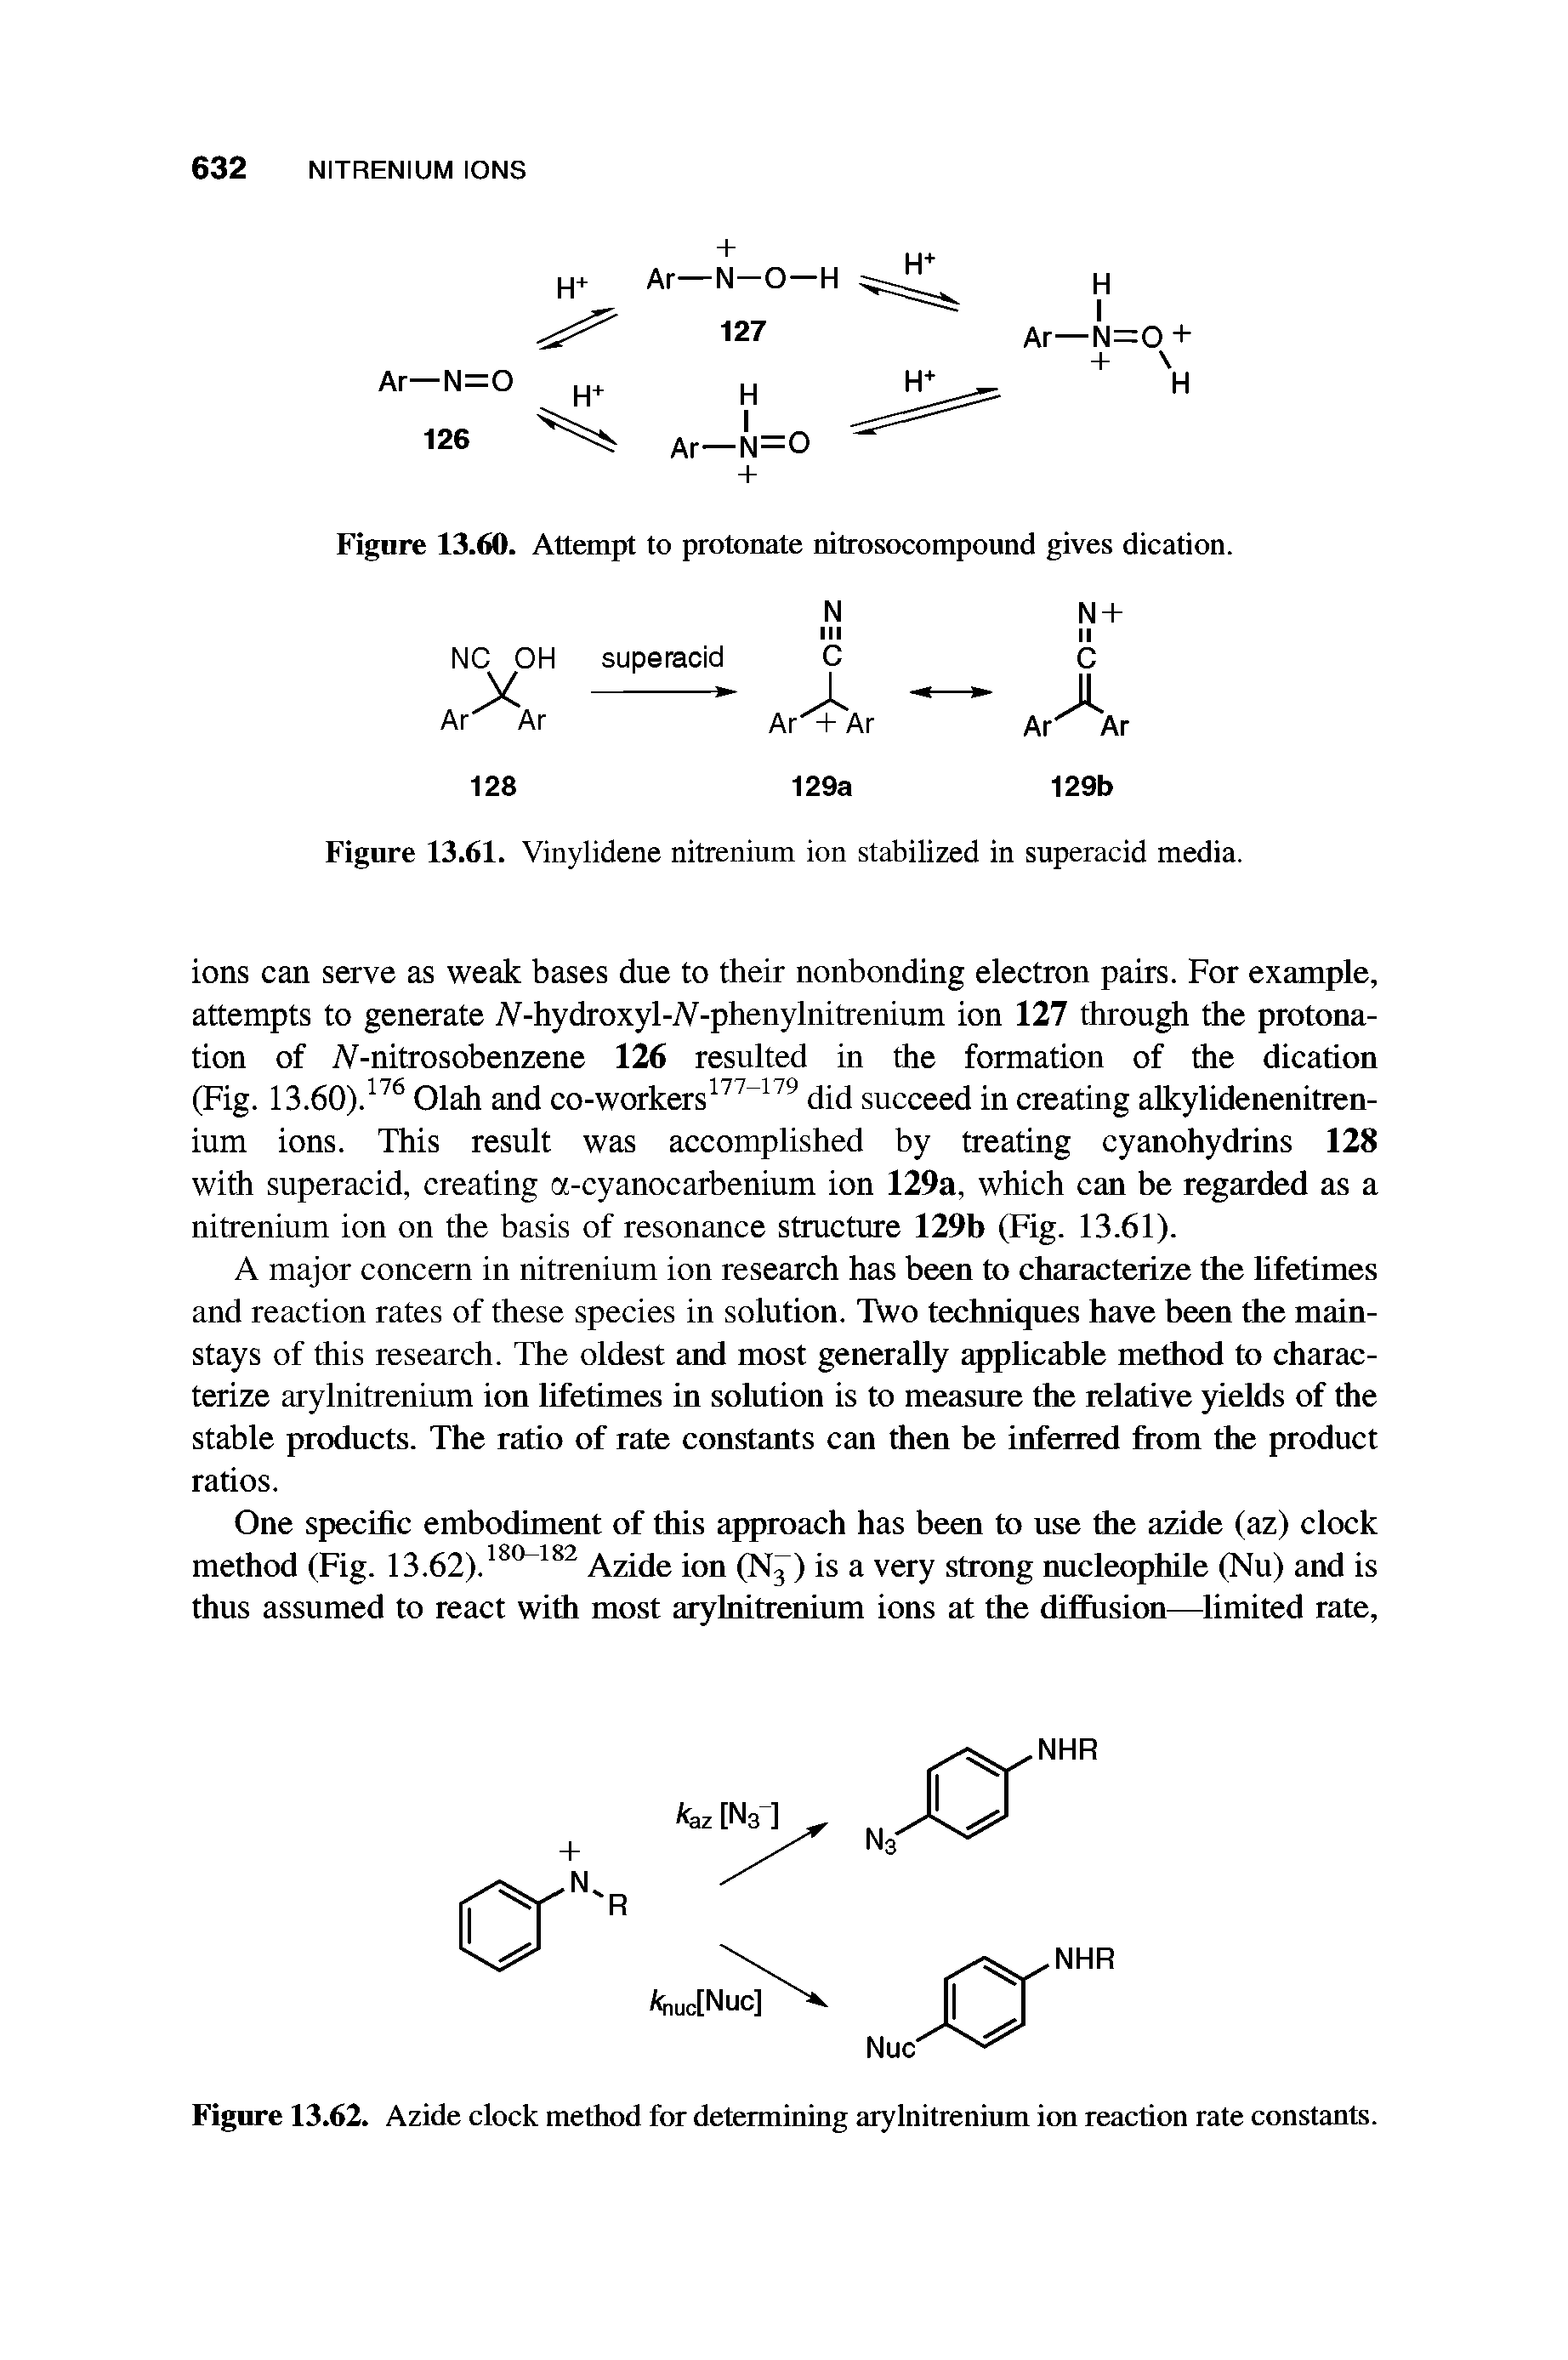 Figure 13.62. Azide clock method for determining arylnitrenium ion reaction rate constants.